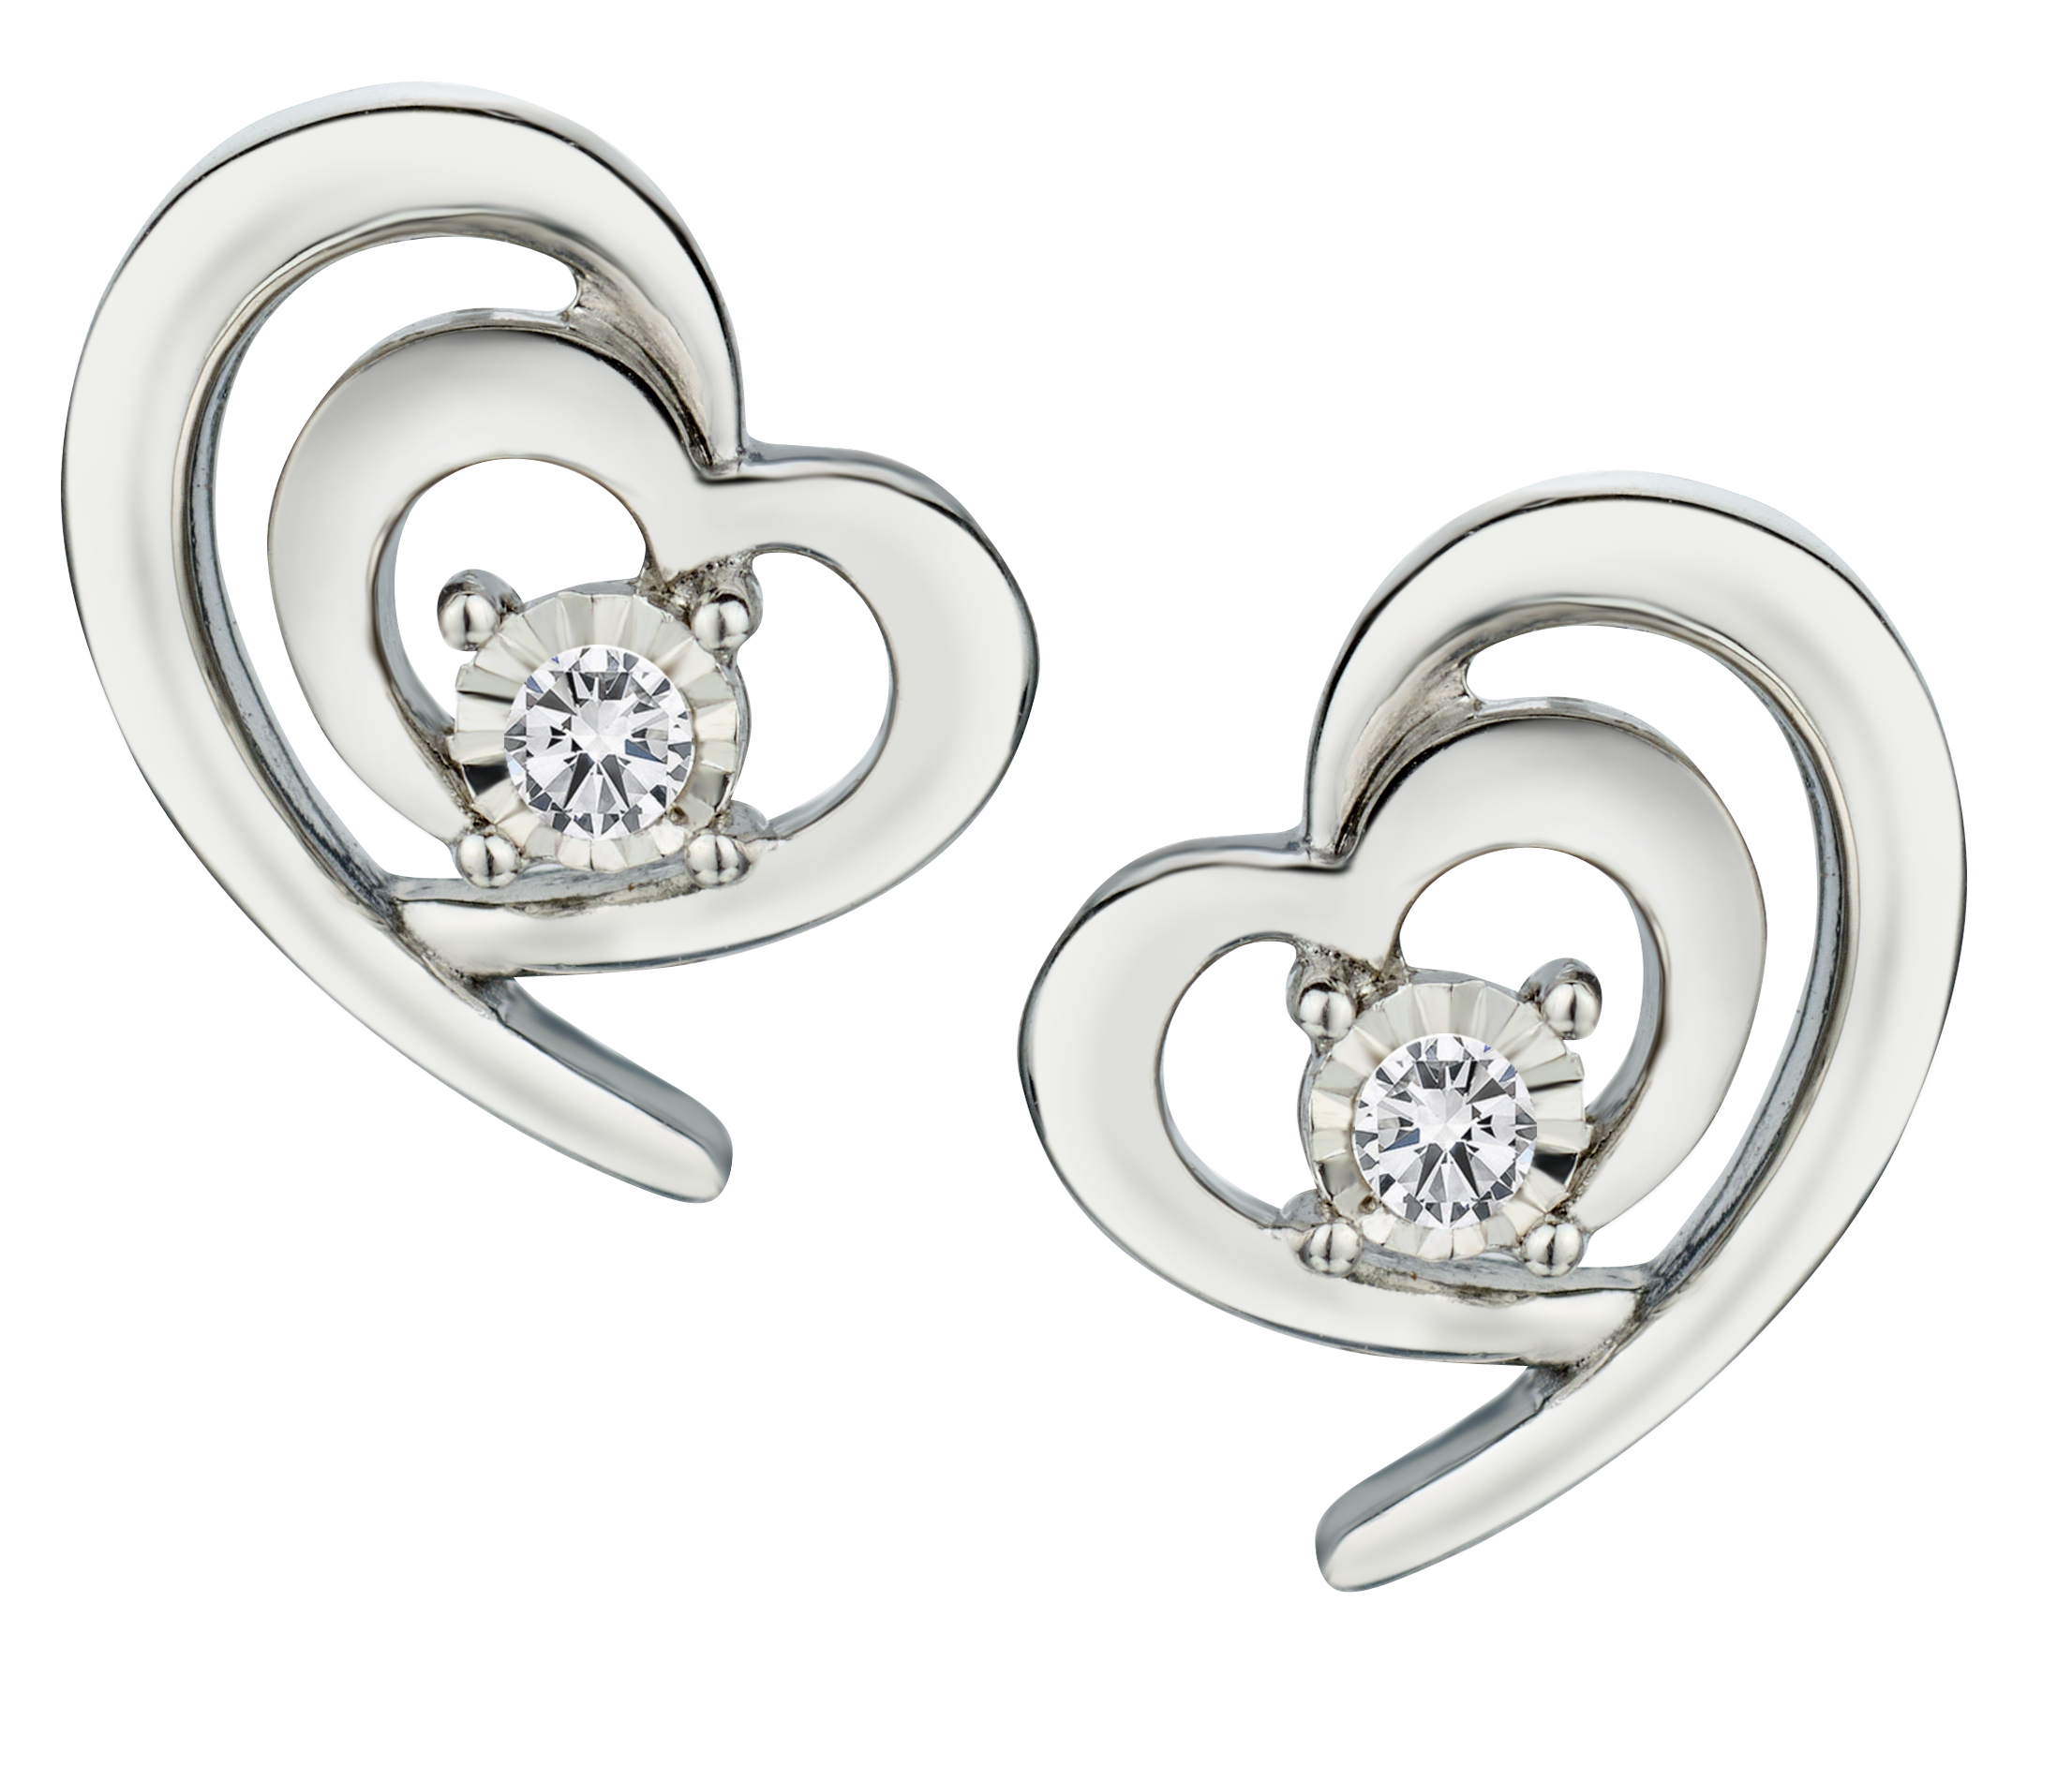 .06 Carat of Lab Grown Diamonds "Double Hearts" Earrings, Silver.....................NOW